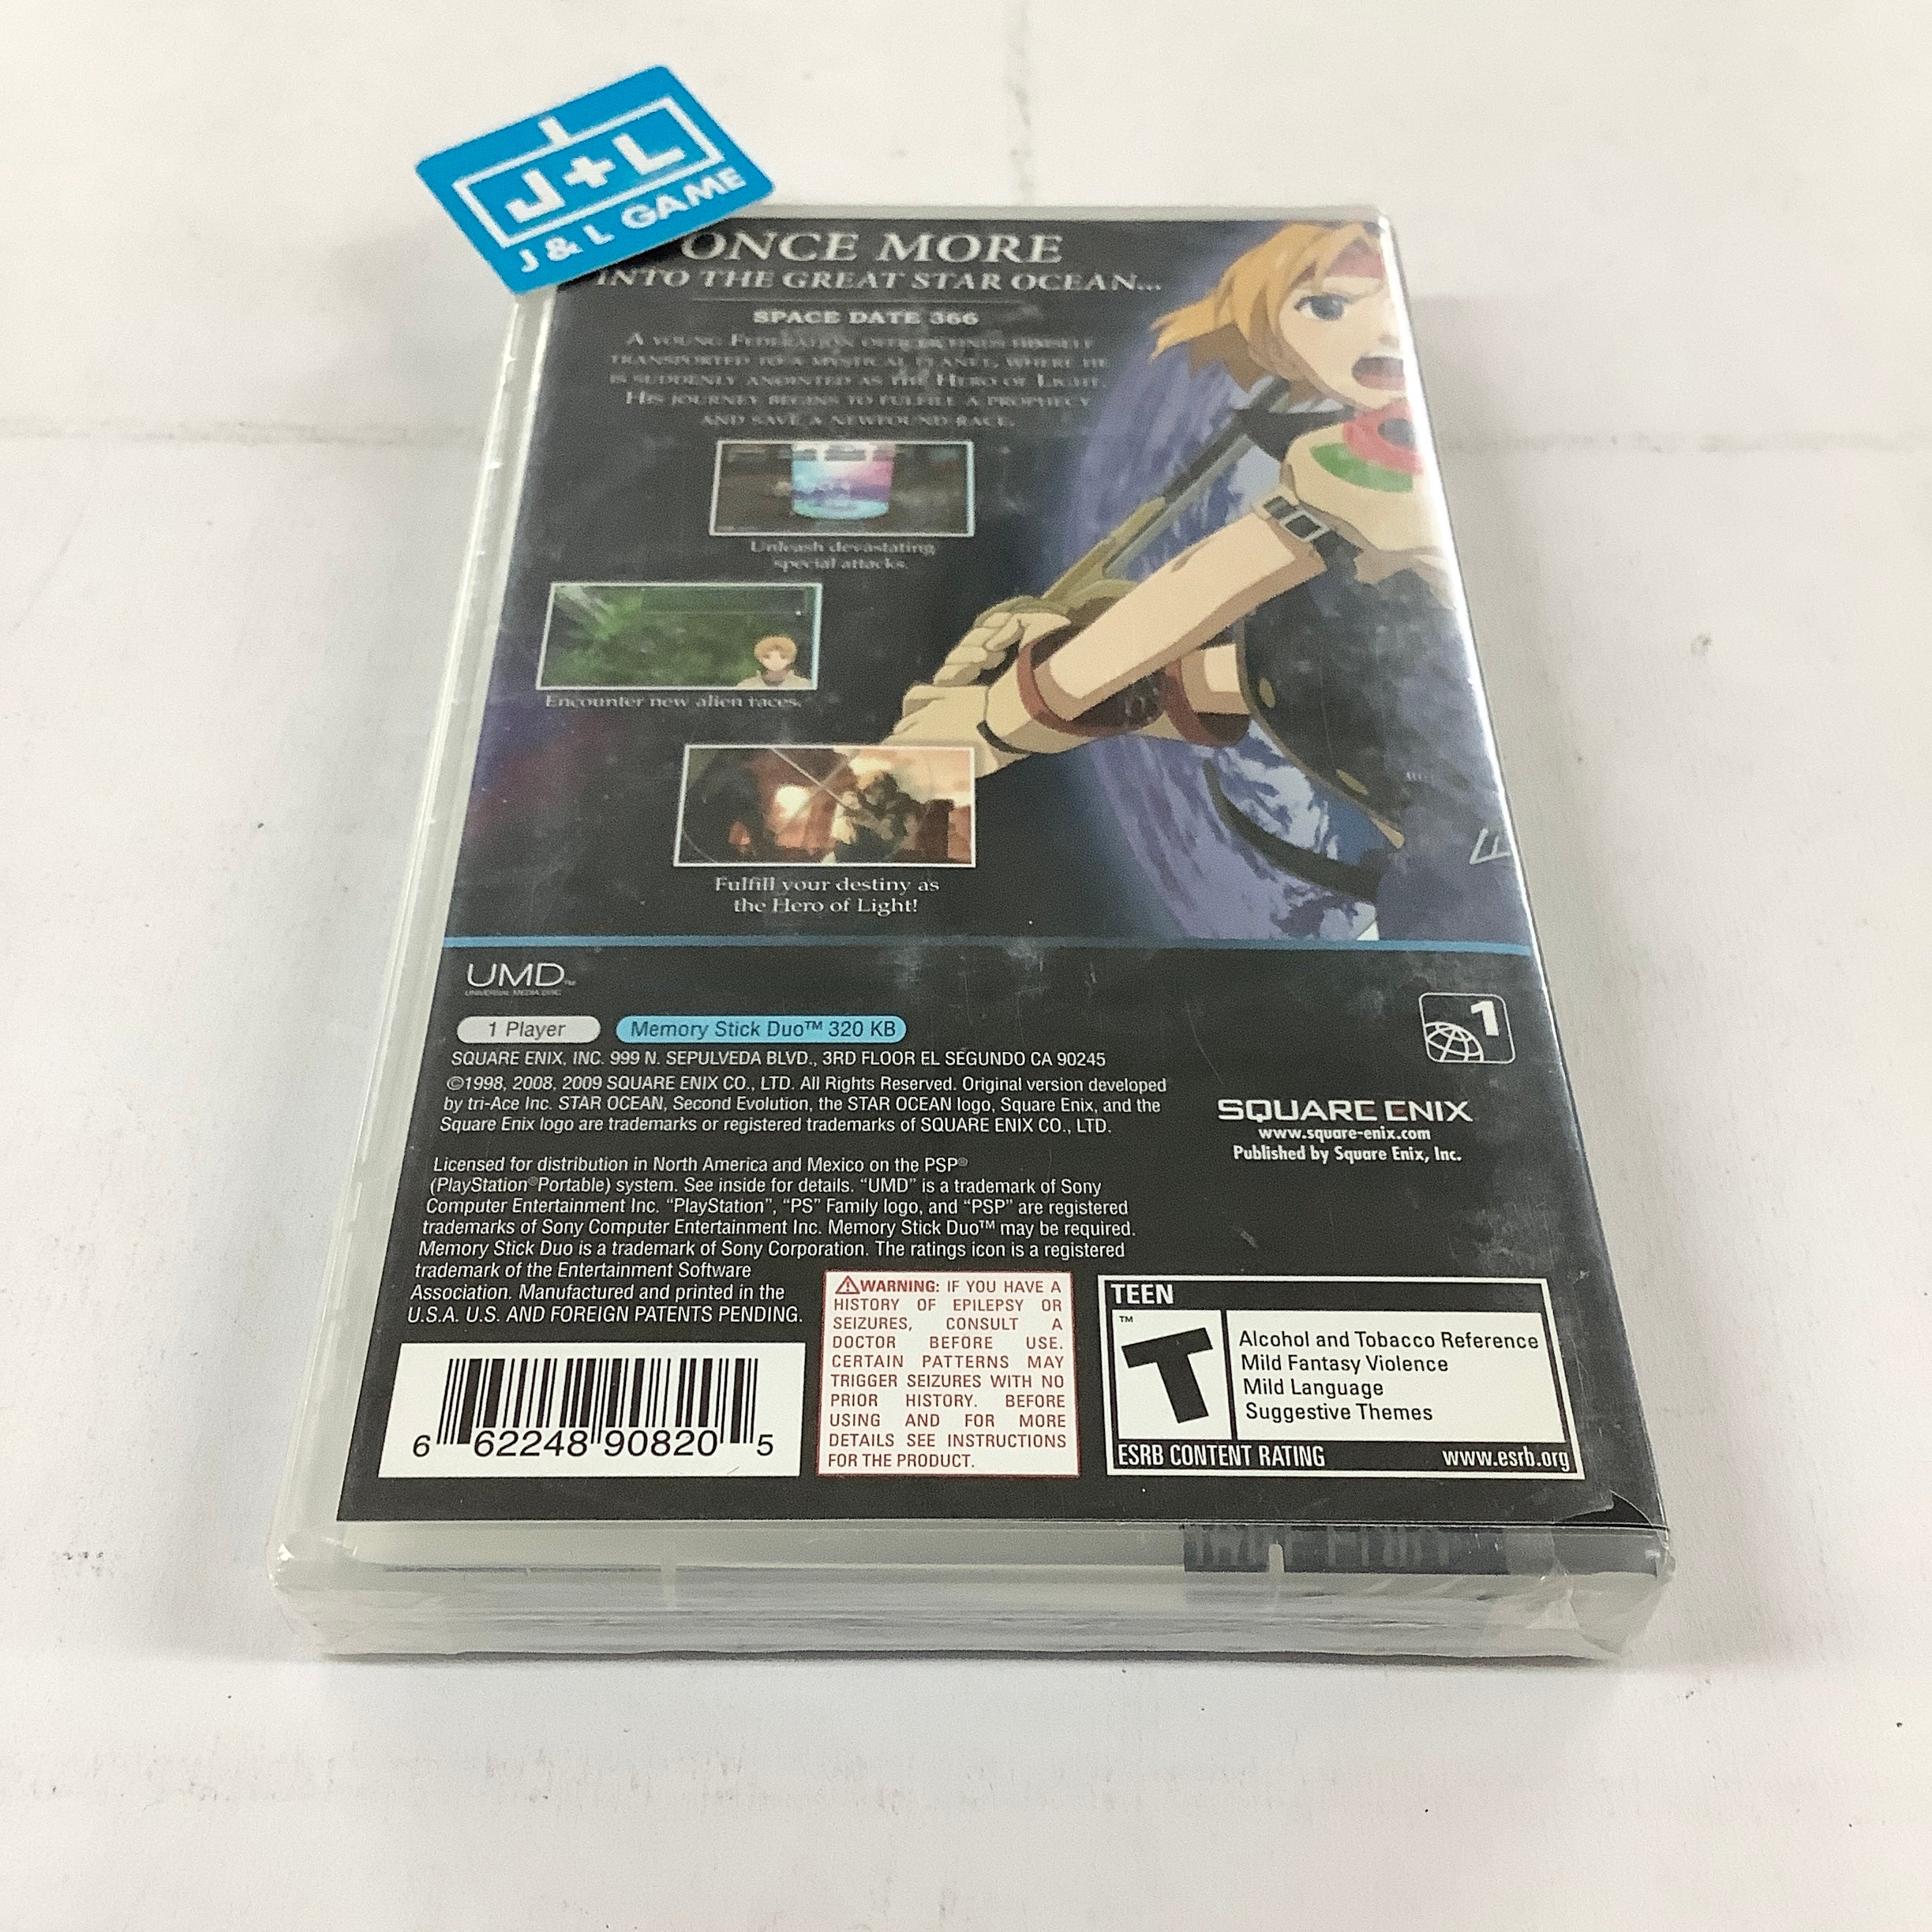 Star Ocean: Second Evolution - Sony PSP Video Games Square Enix   